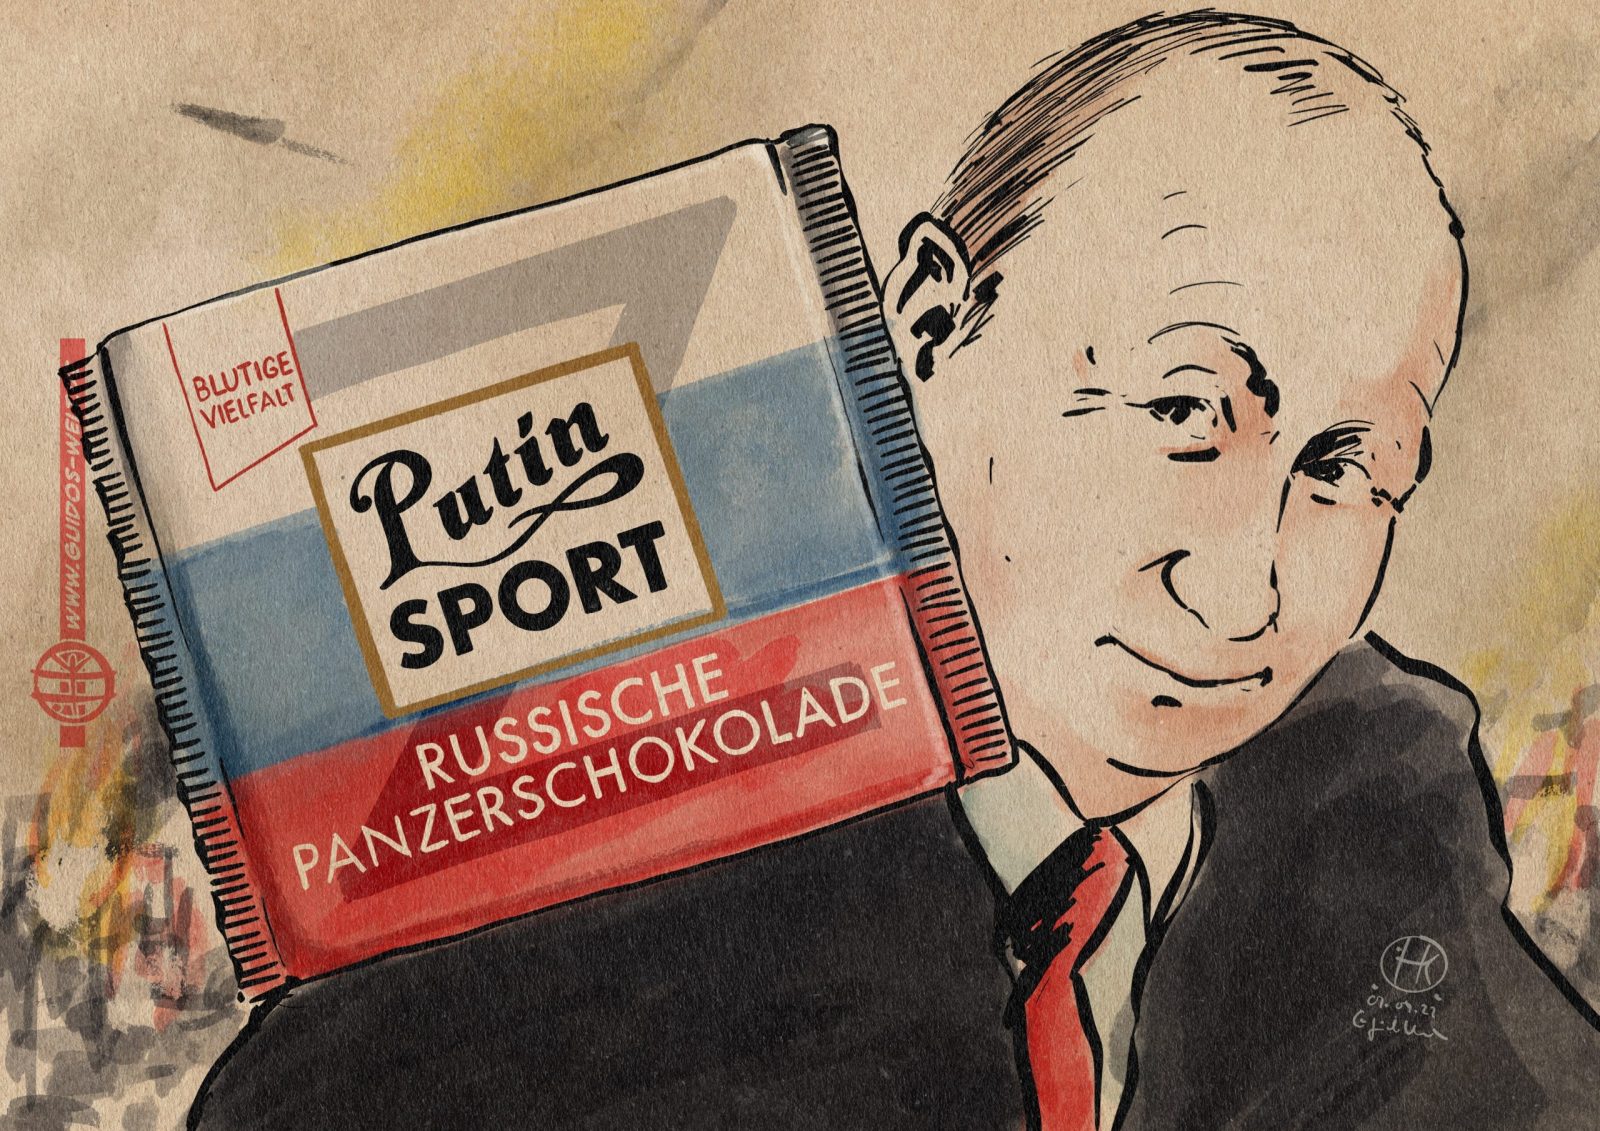 Putin Sport